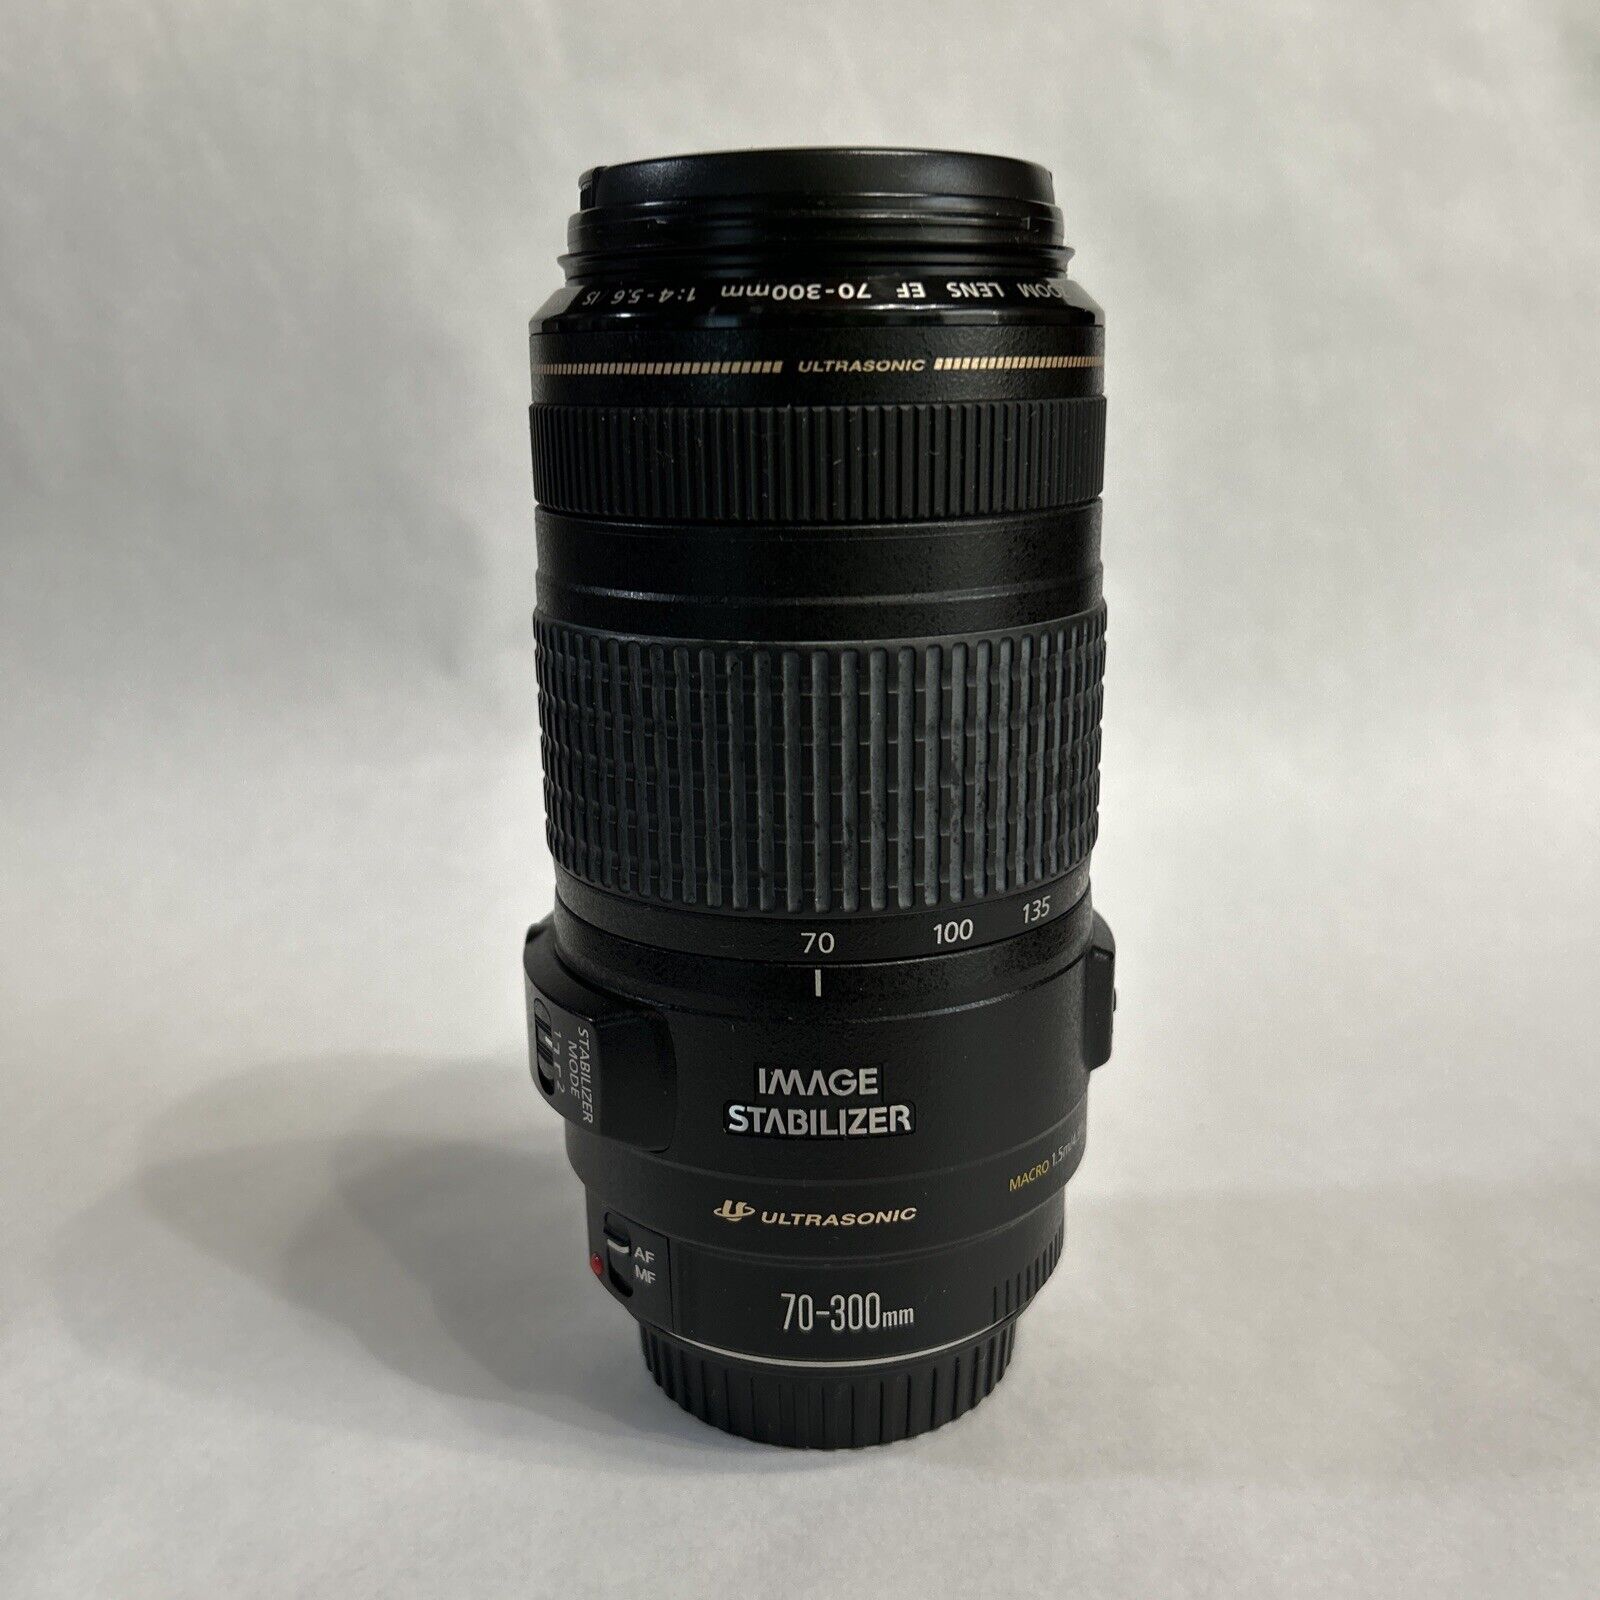 Canon EF 70-300mm f/4.0-5.6 IS USM Lens